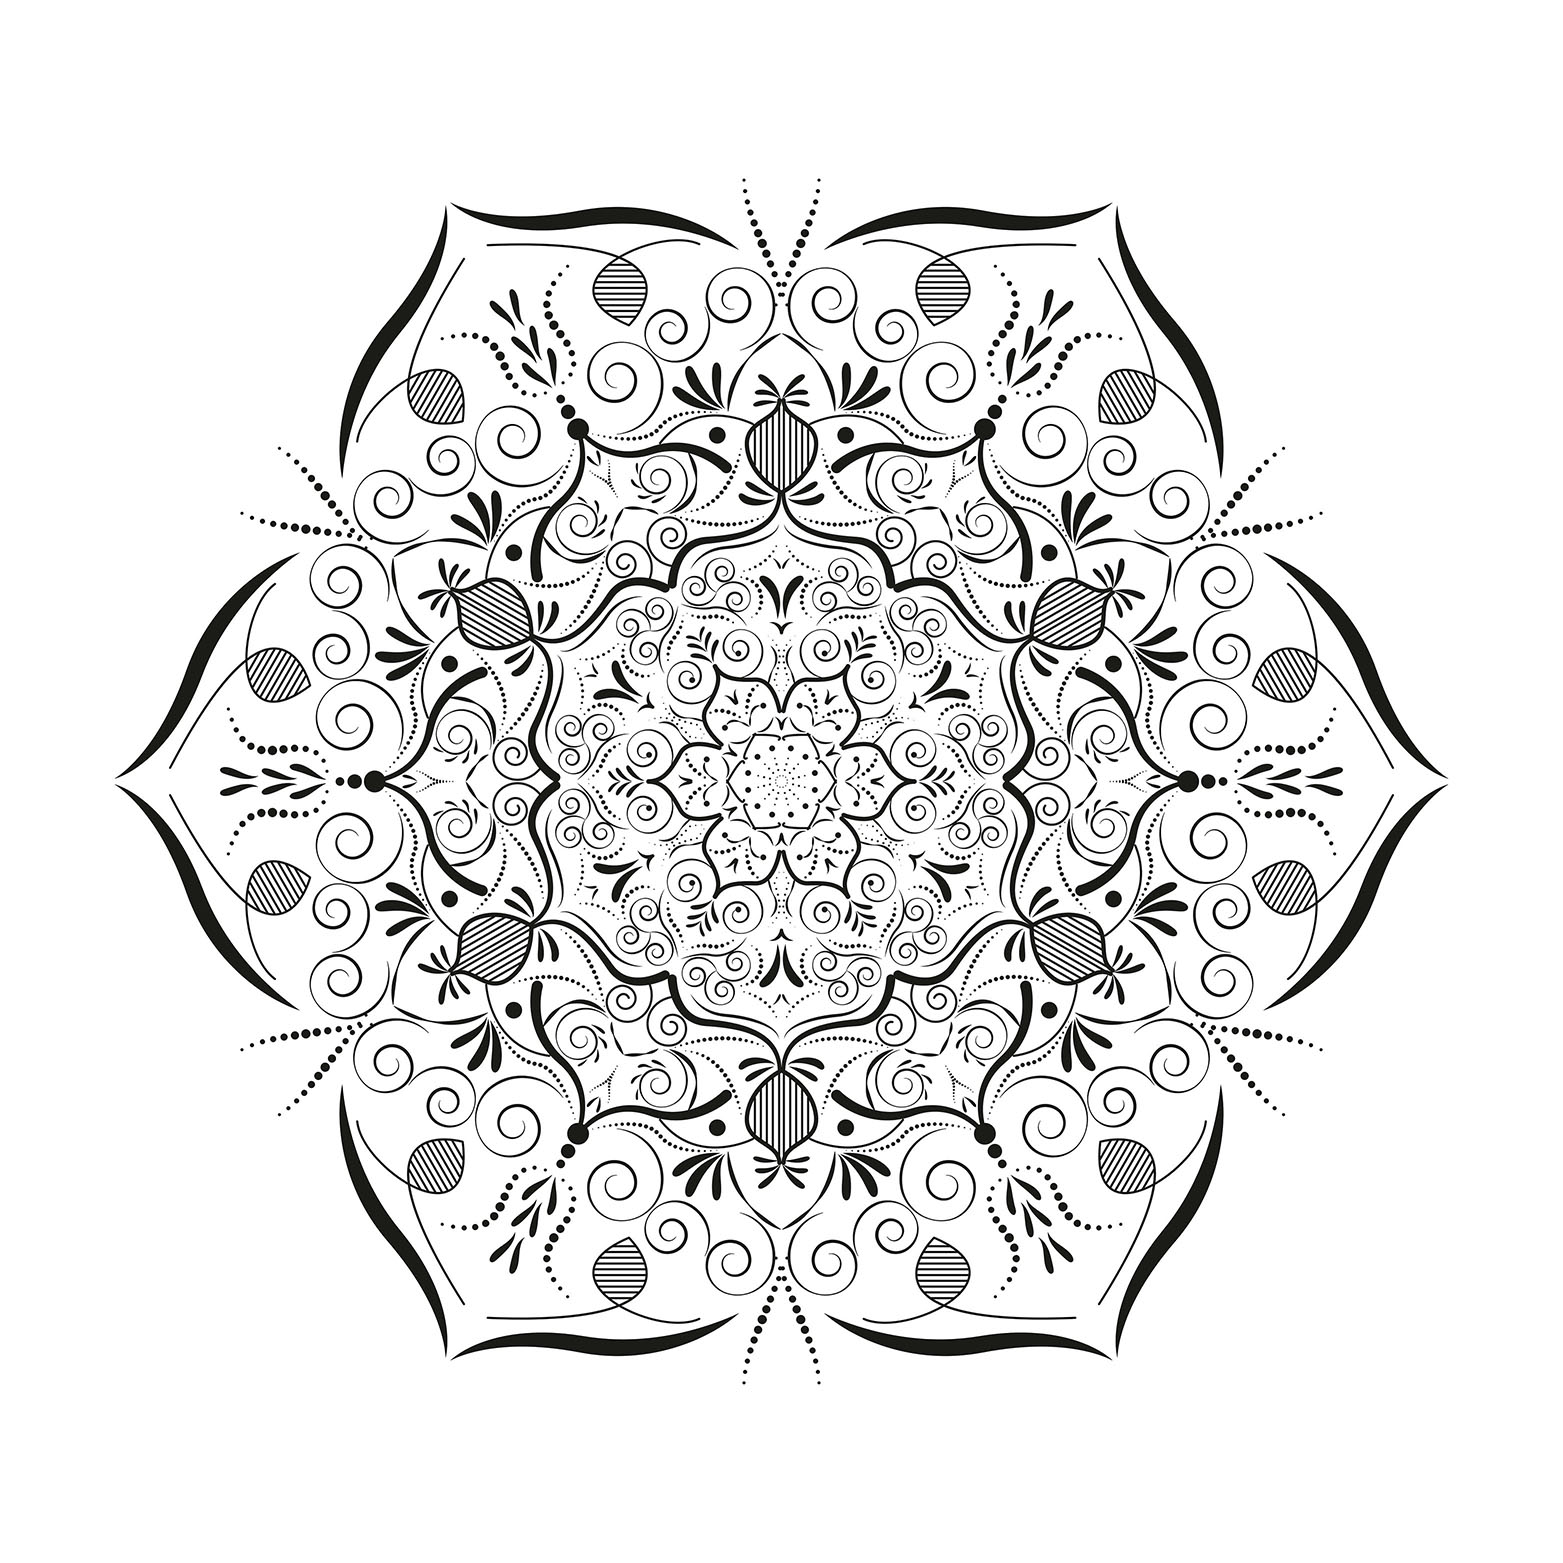 vector art work of mandala black and white pattern 3 3000x3000 px copy copy min 23